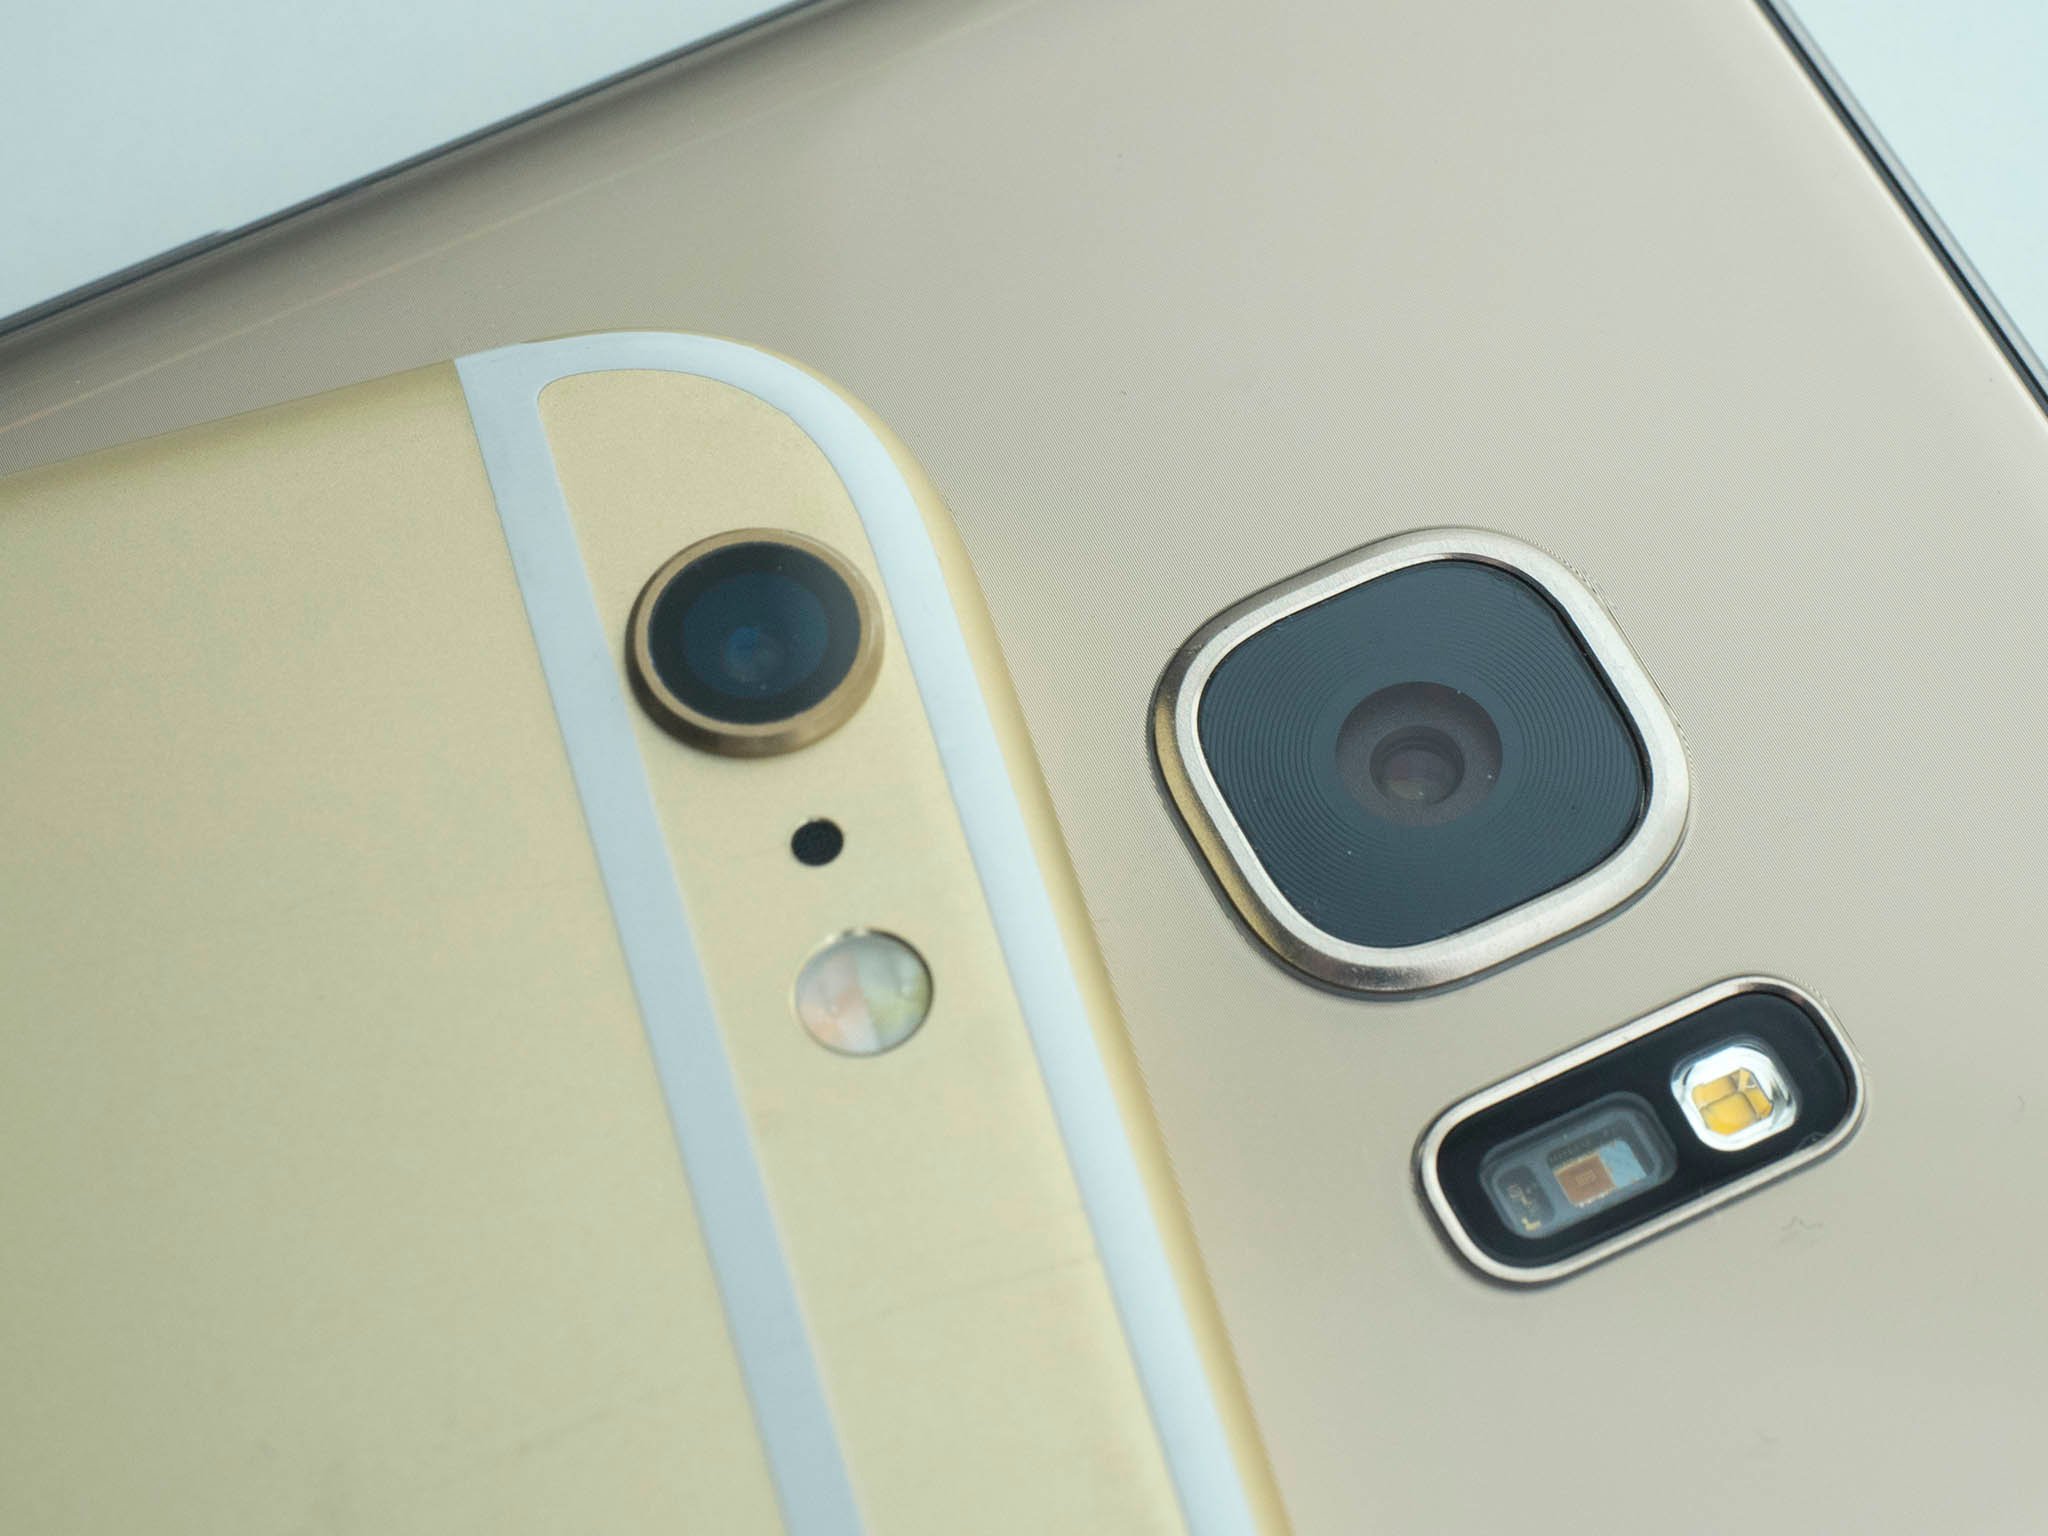 Galaxy S7 iPhone 6s cameras